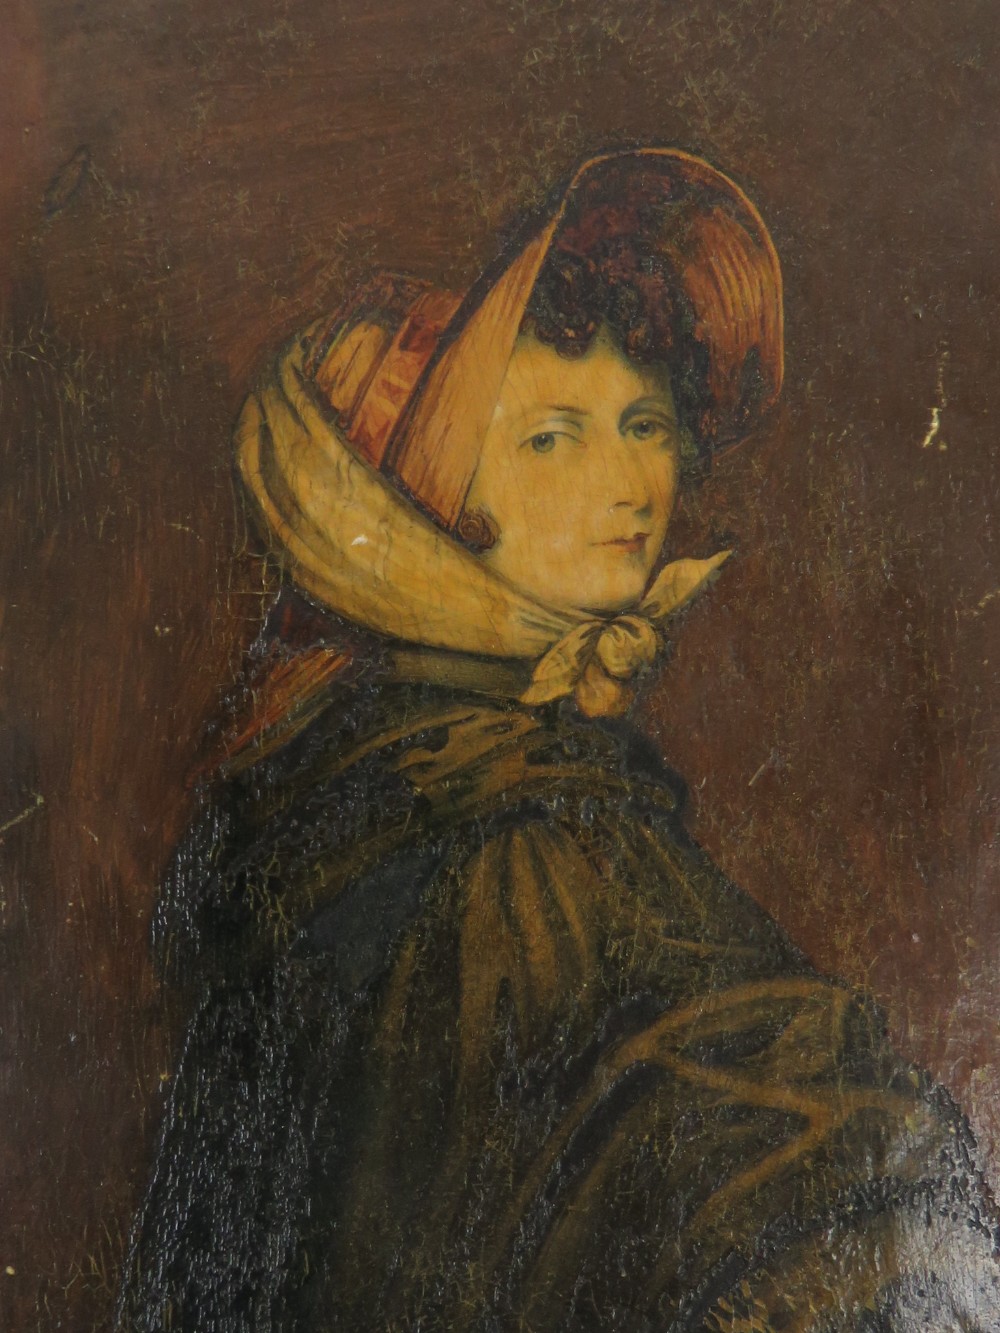 Emily Brontë. The lost 'Bonnet Portrait' rediscovered.